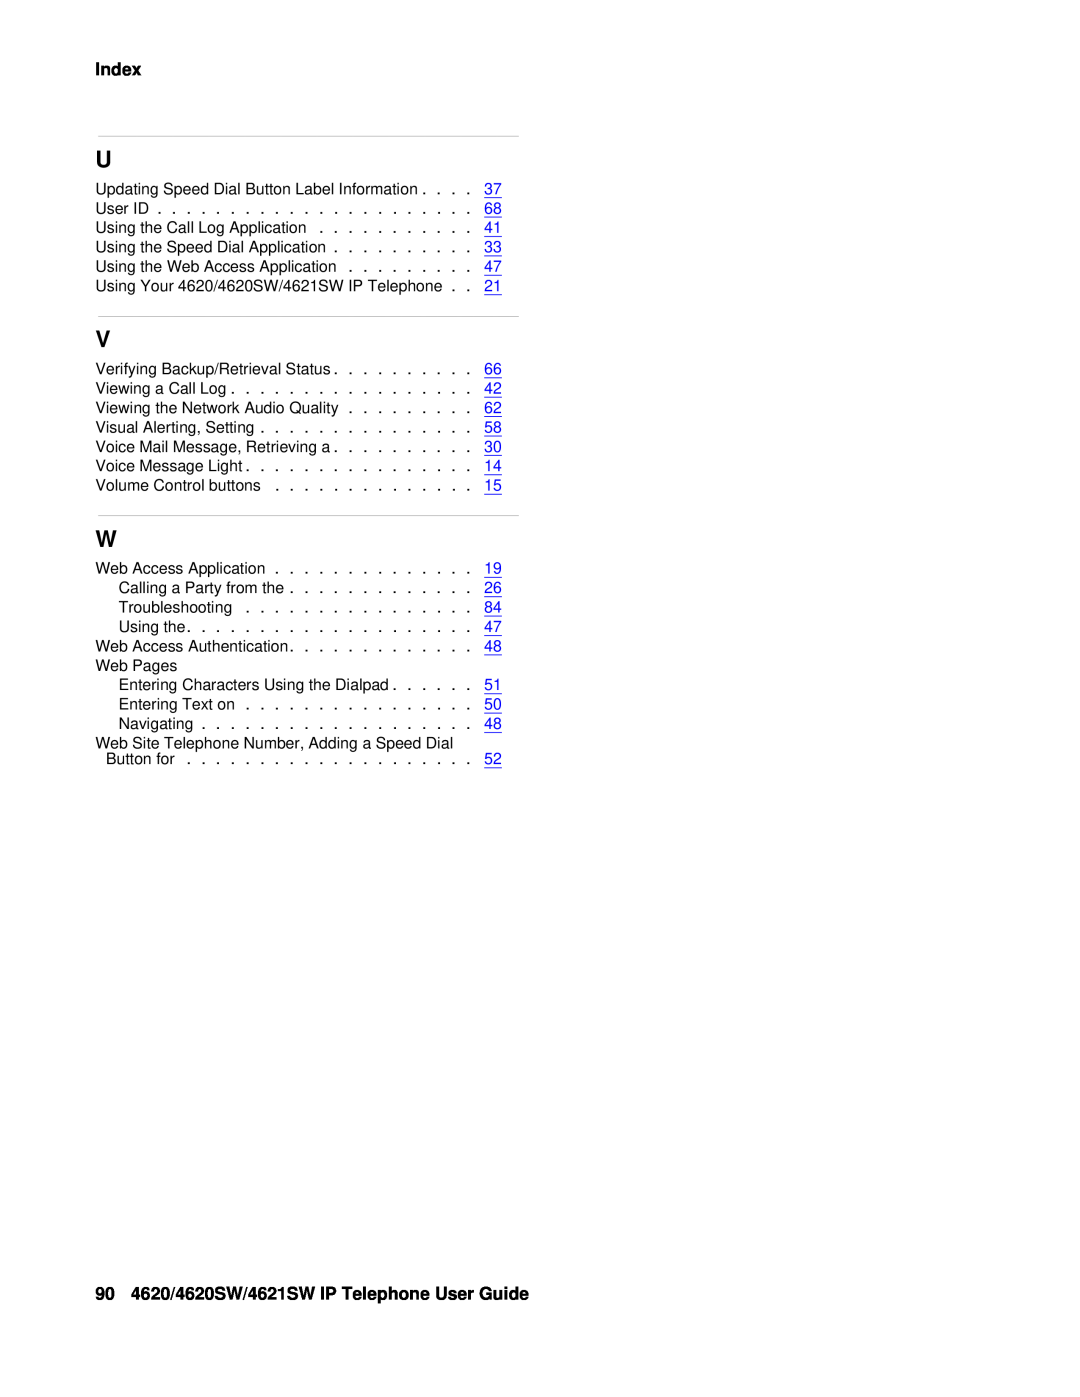 Avaya manual Index, 90 4620/4620SW/4621SW IP Telephone User Guide 